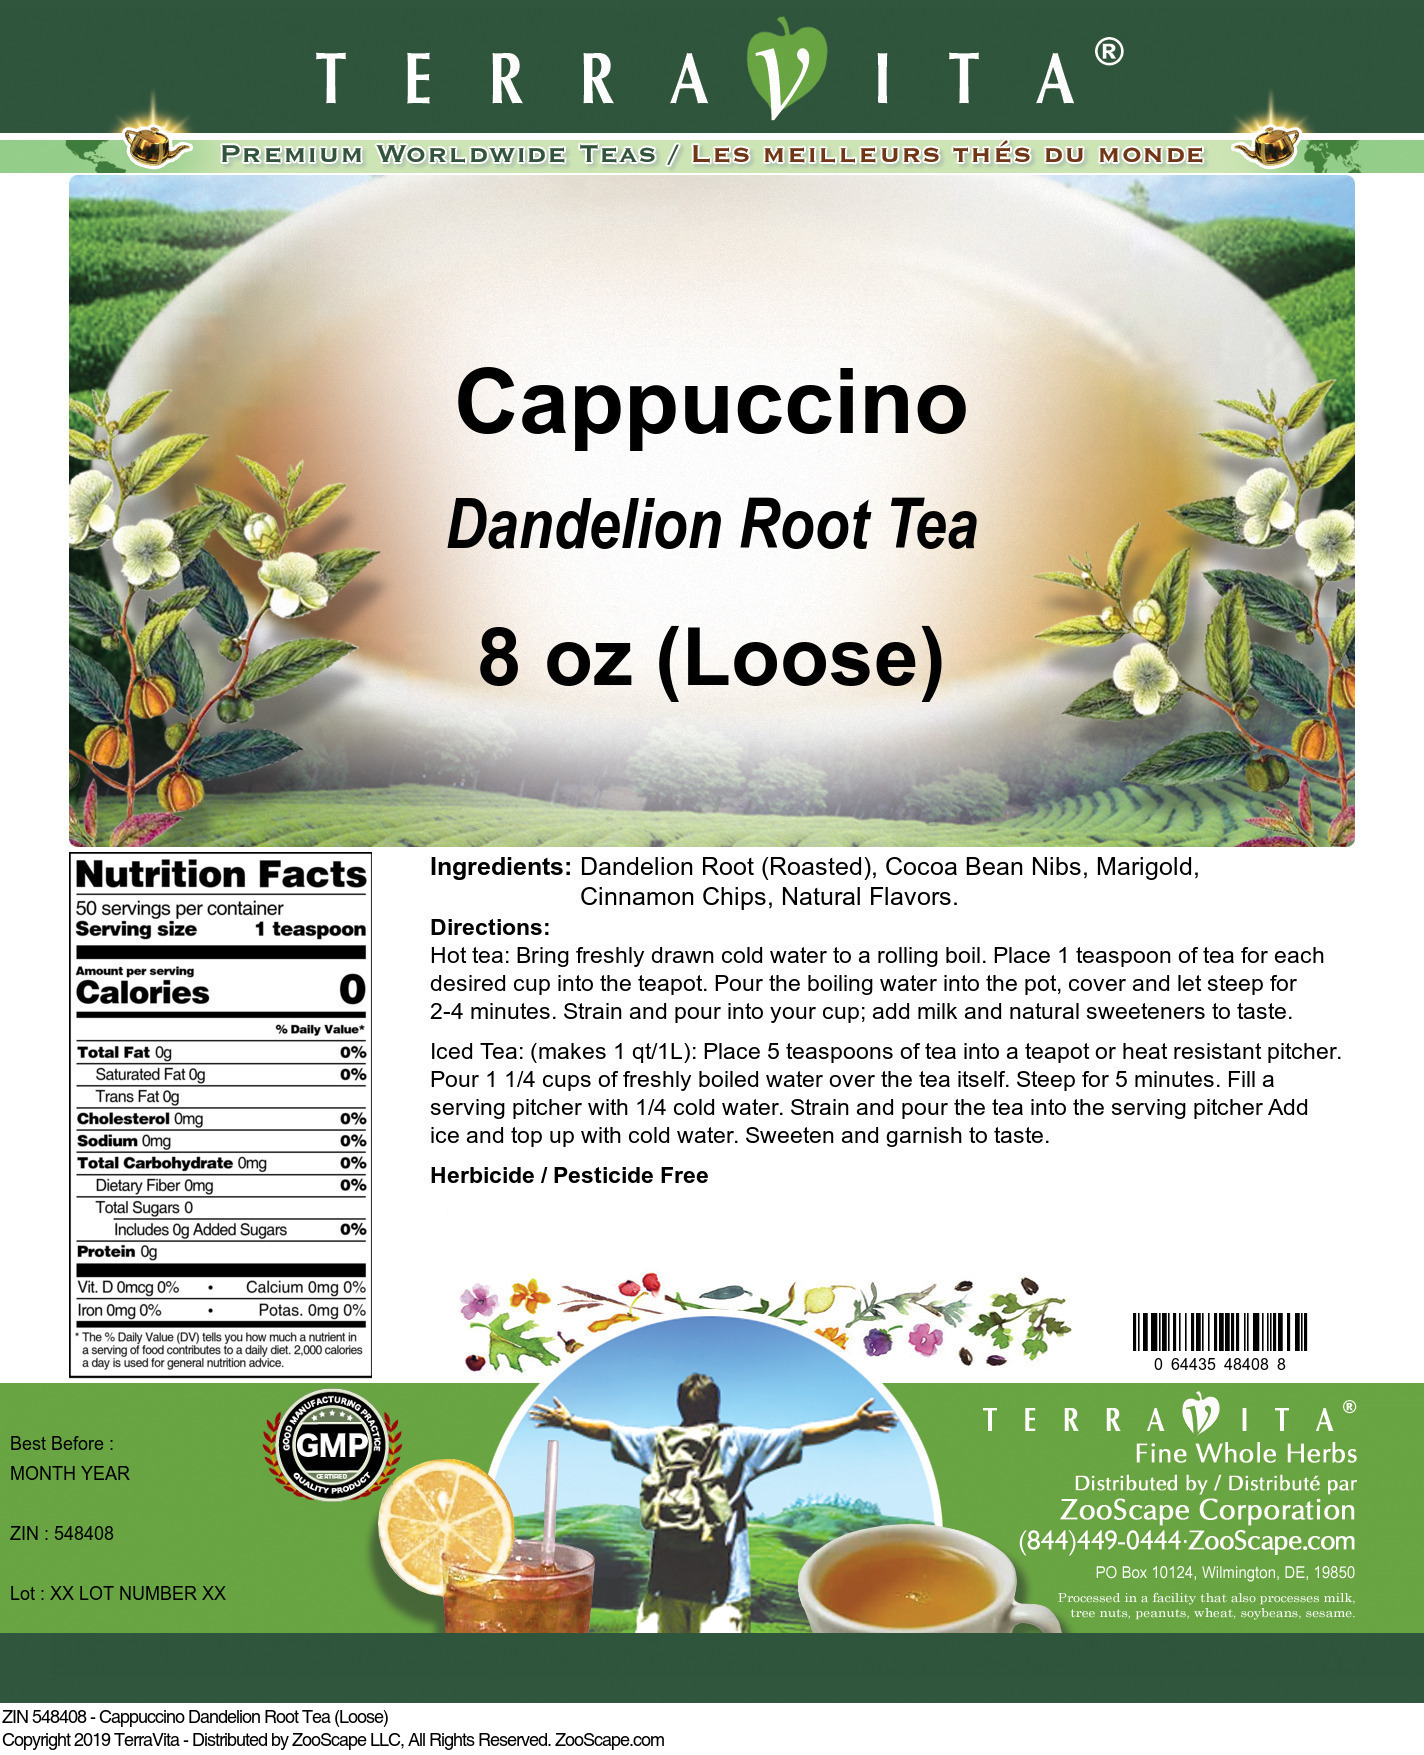 Cappuccino Dandelion Root Tea (Loose) - Label